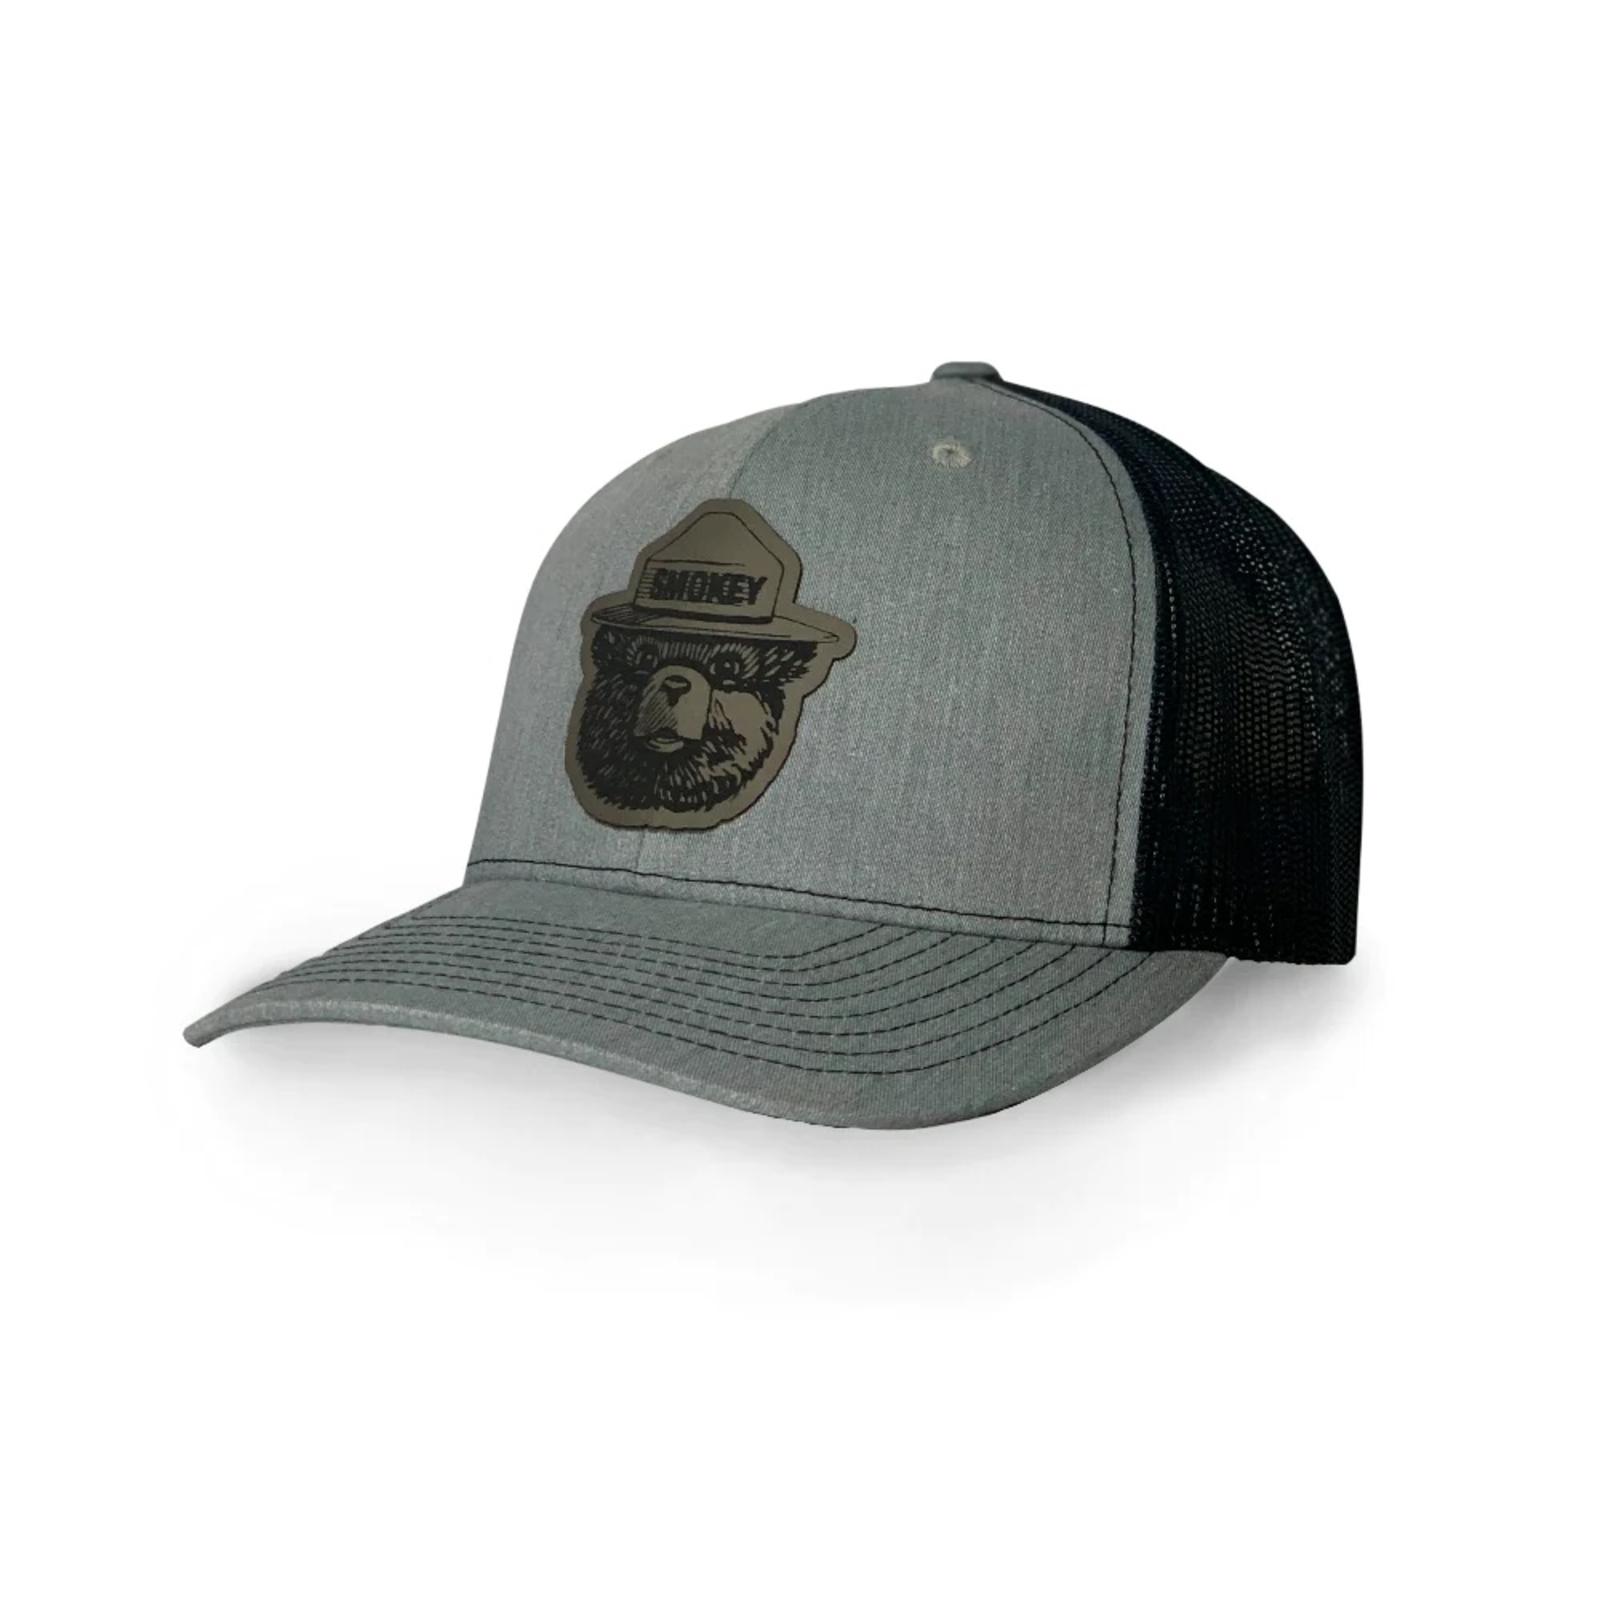 Smokey Bear Patch Structured Trucker Hat